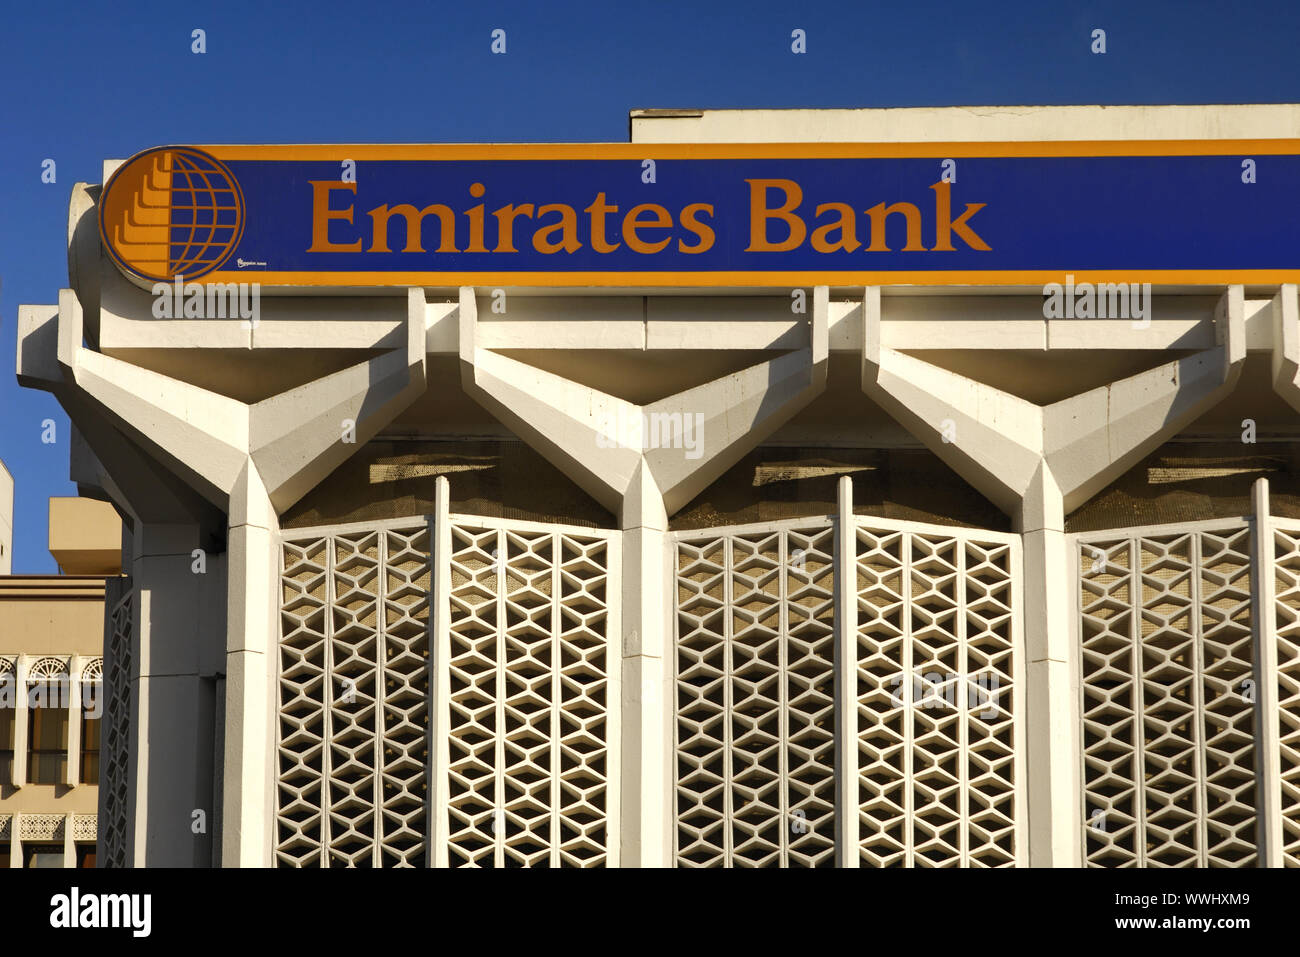 Emirates Bank Stock Photos Emirates Bank Stock Images Alamy